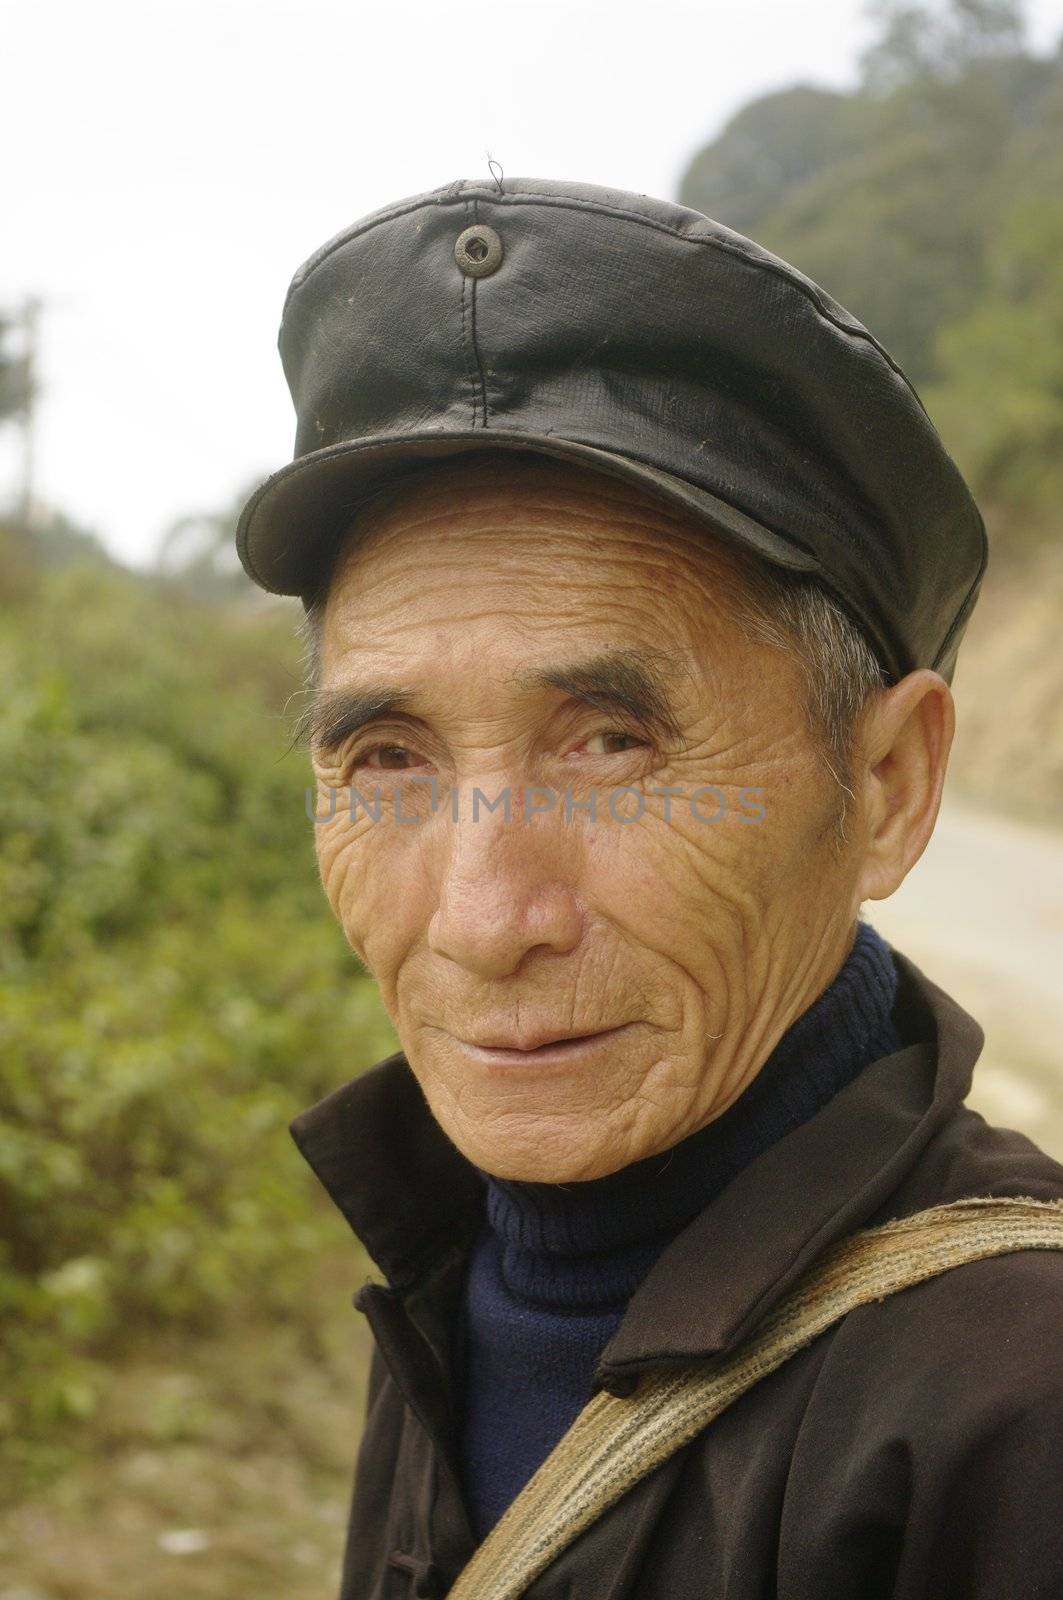 Black Hmong ethnic man by Duroc